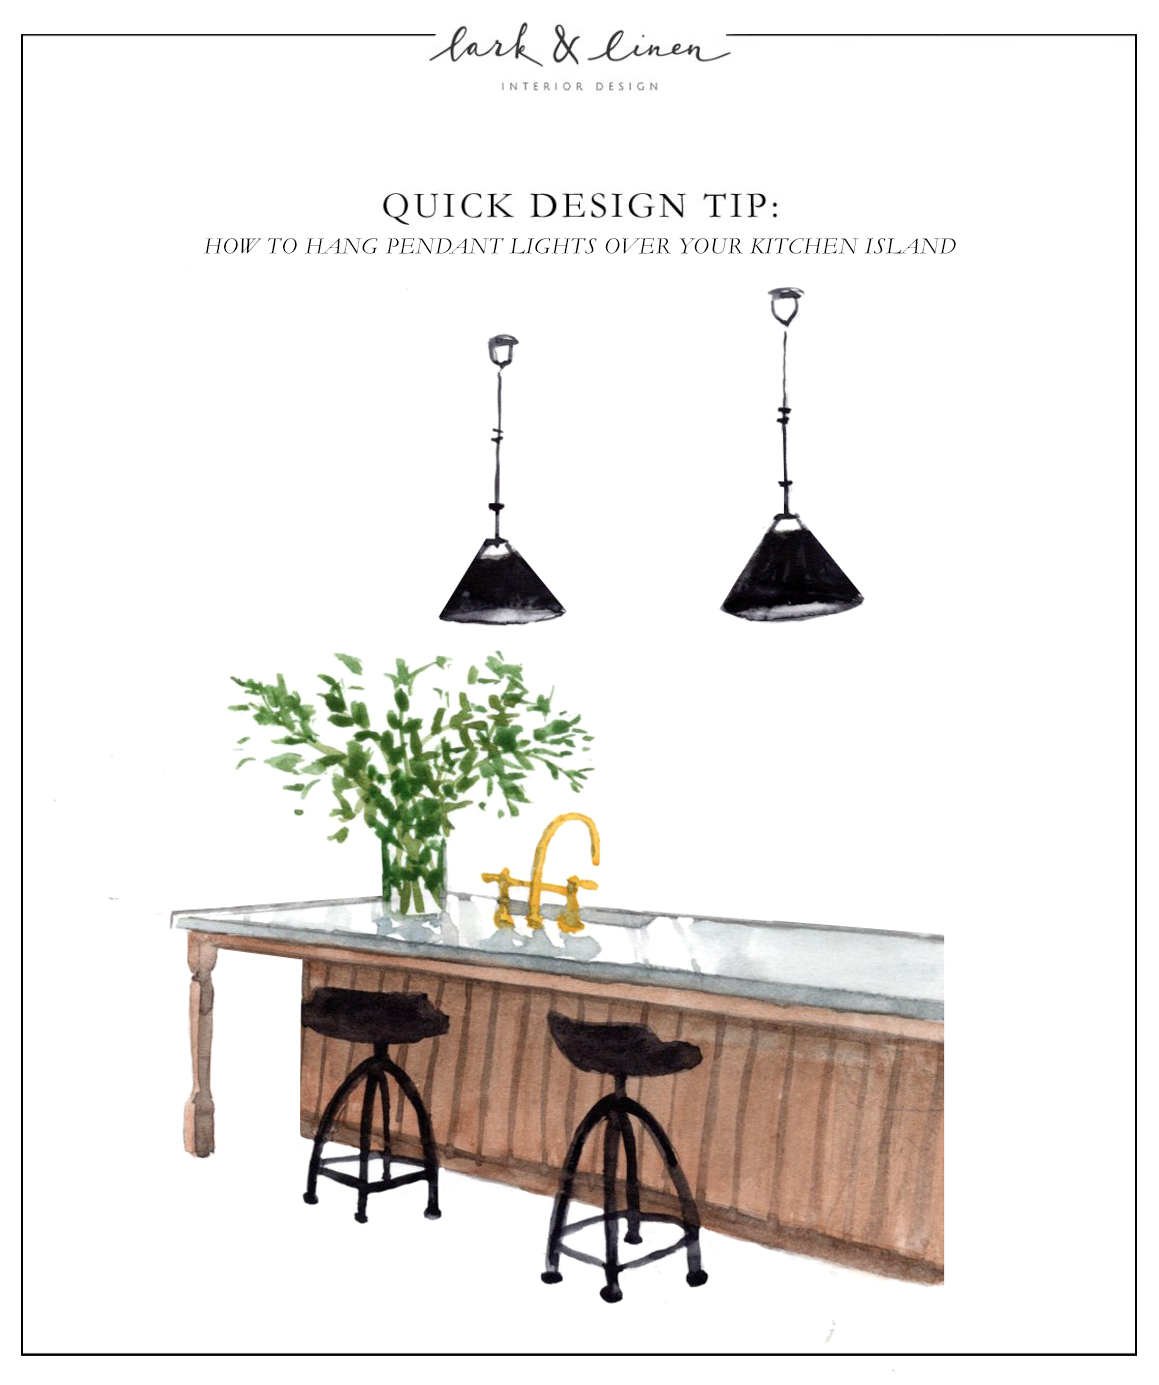 How to Hang Pendants Over Your Kitchen Island | lark & linen